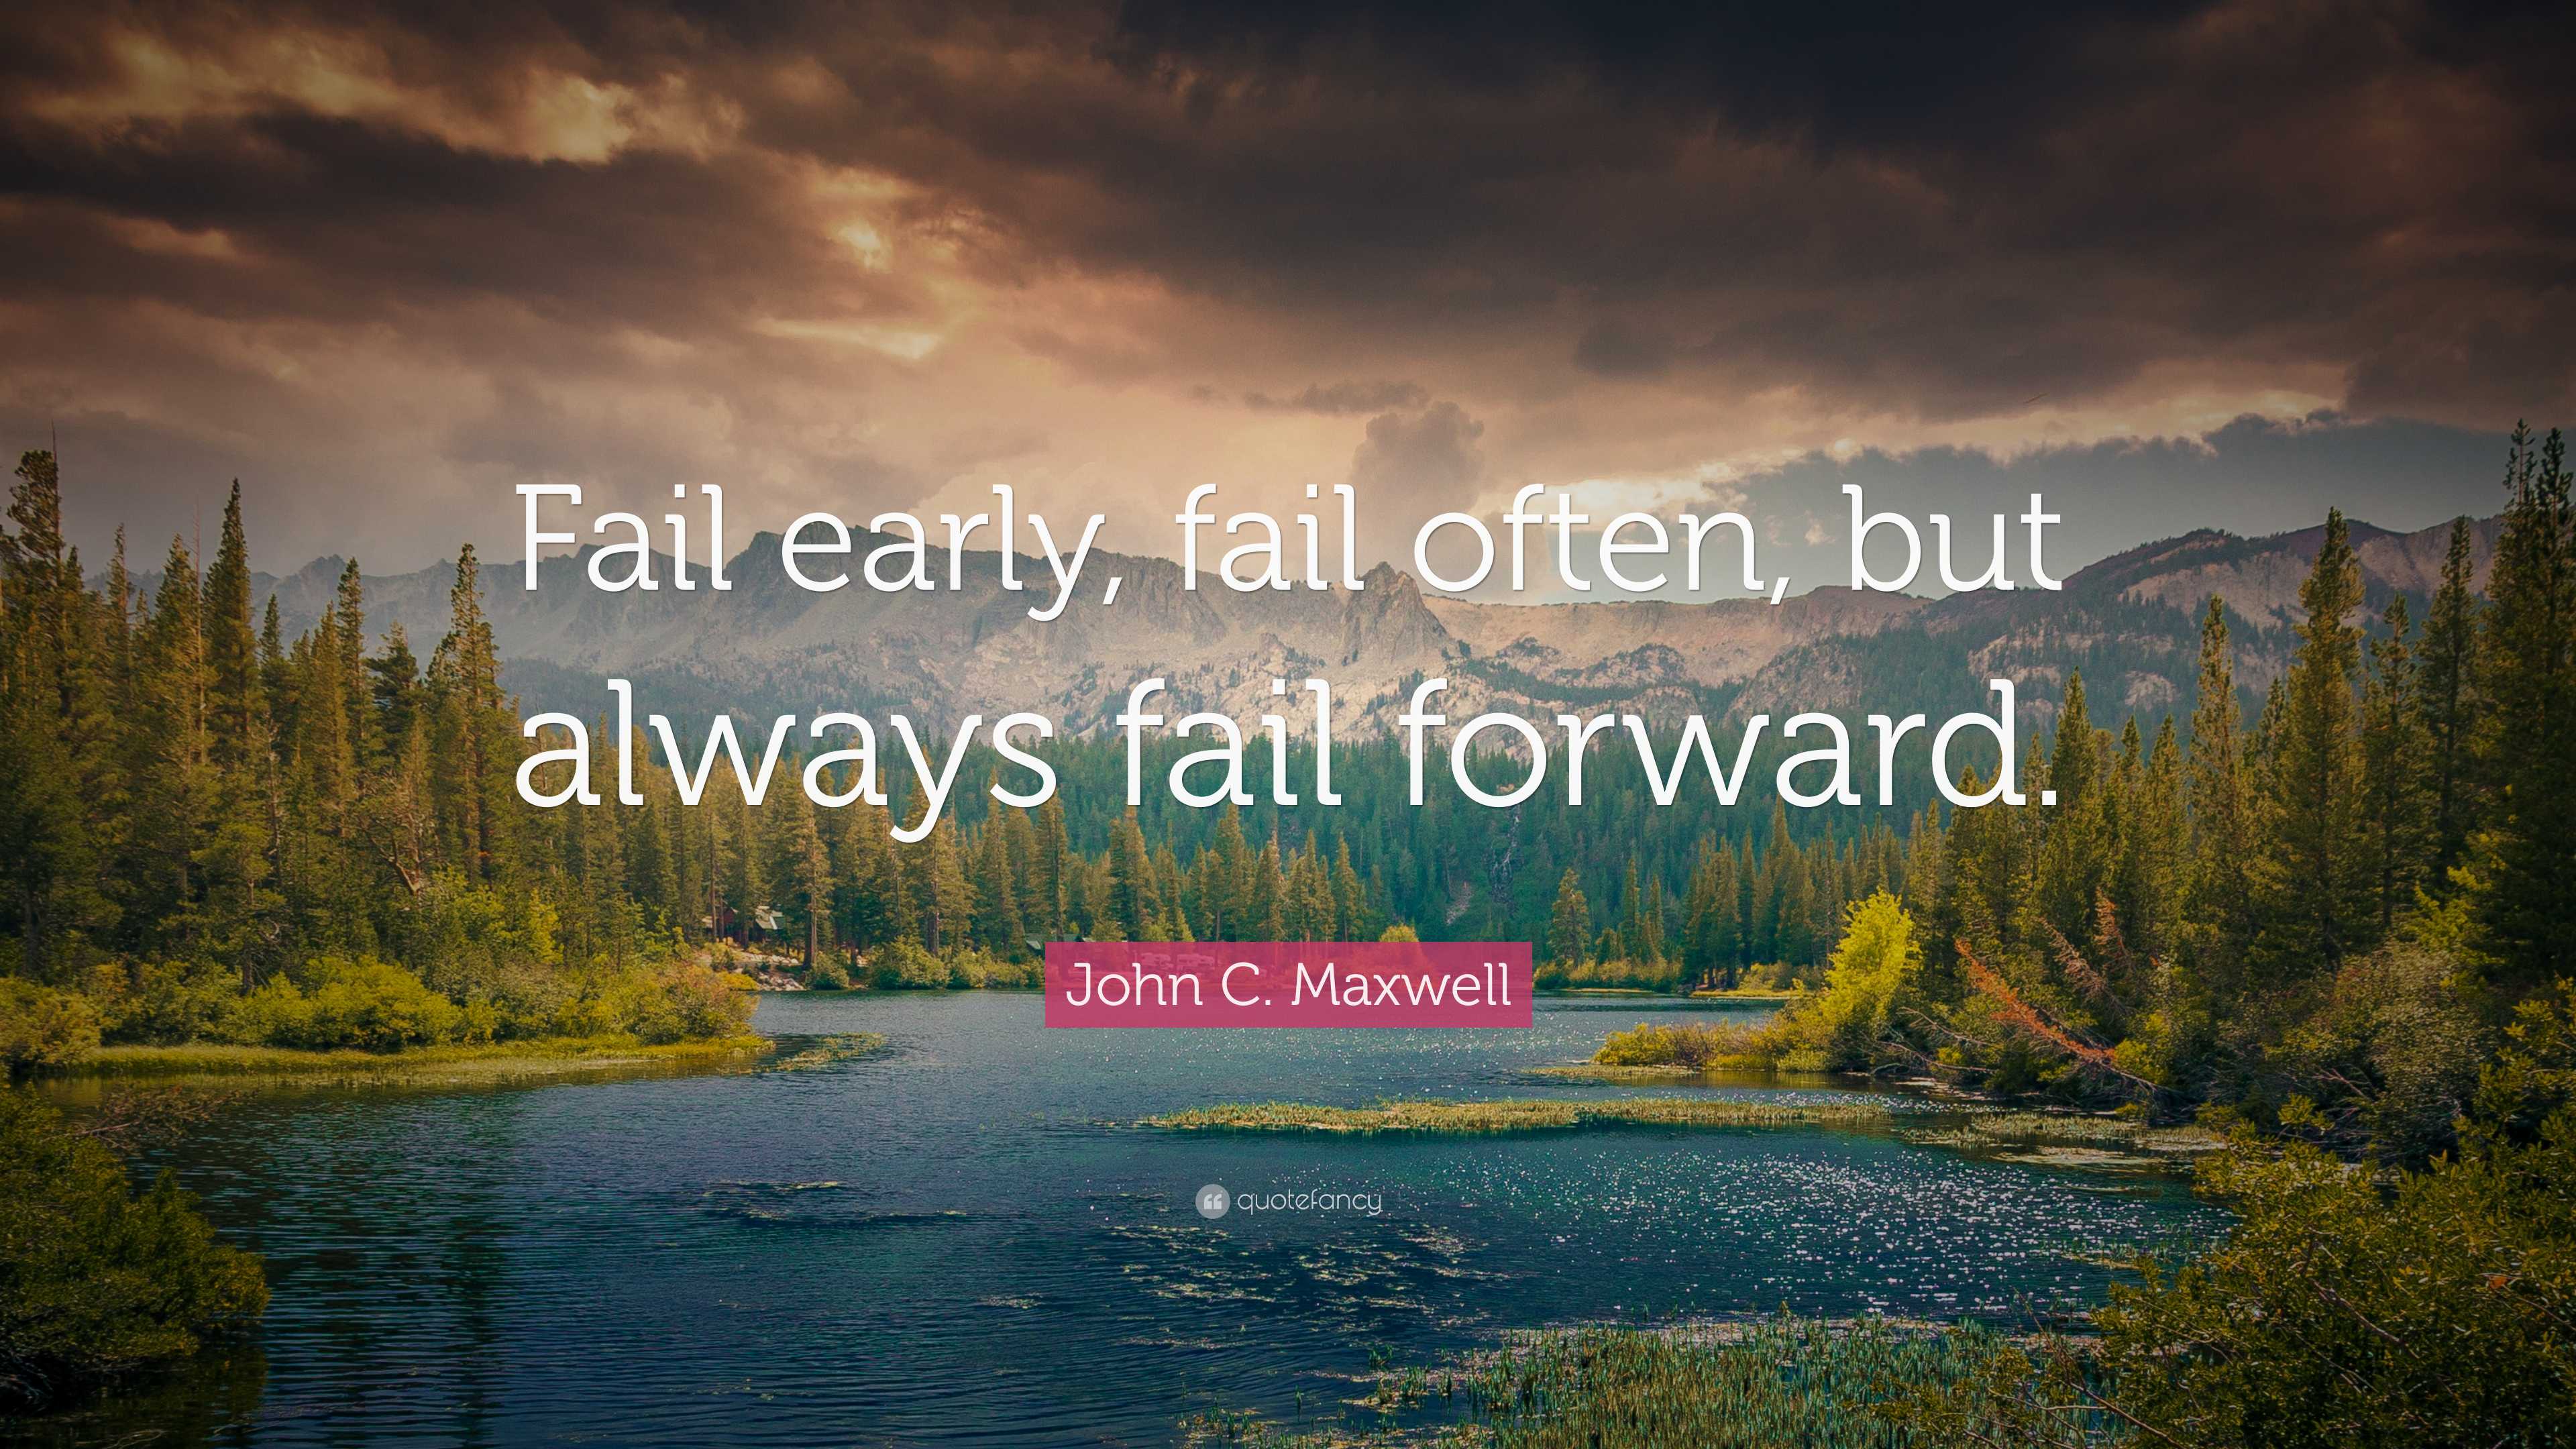 John C. Maxwell Quote: “Fail early, fail often, but always fail forward.”